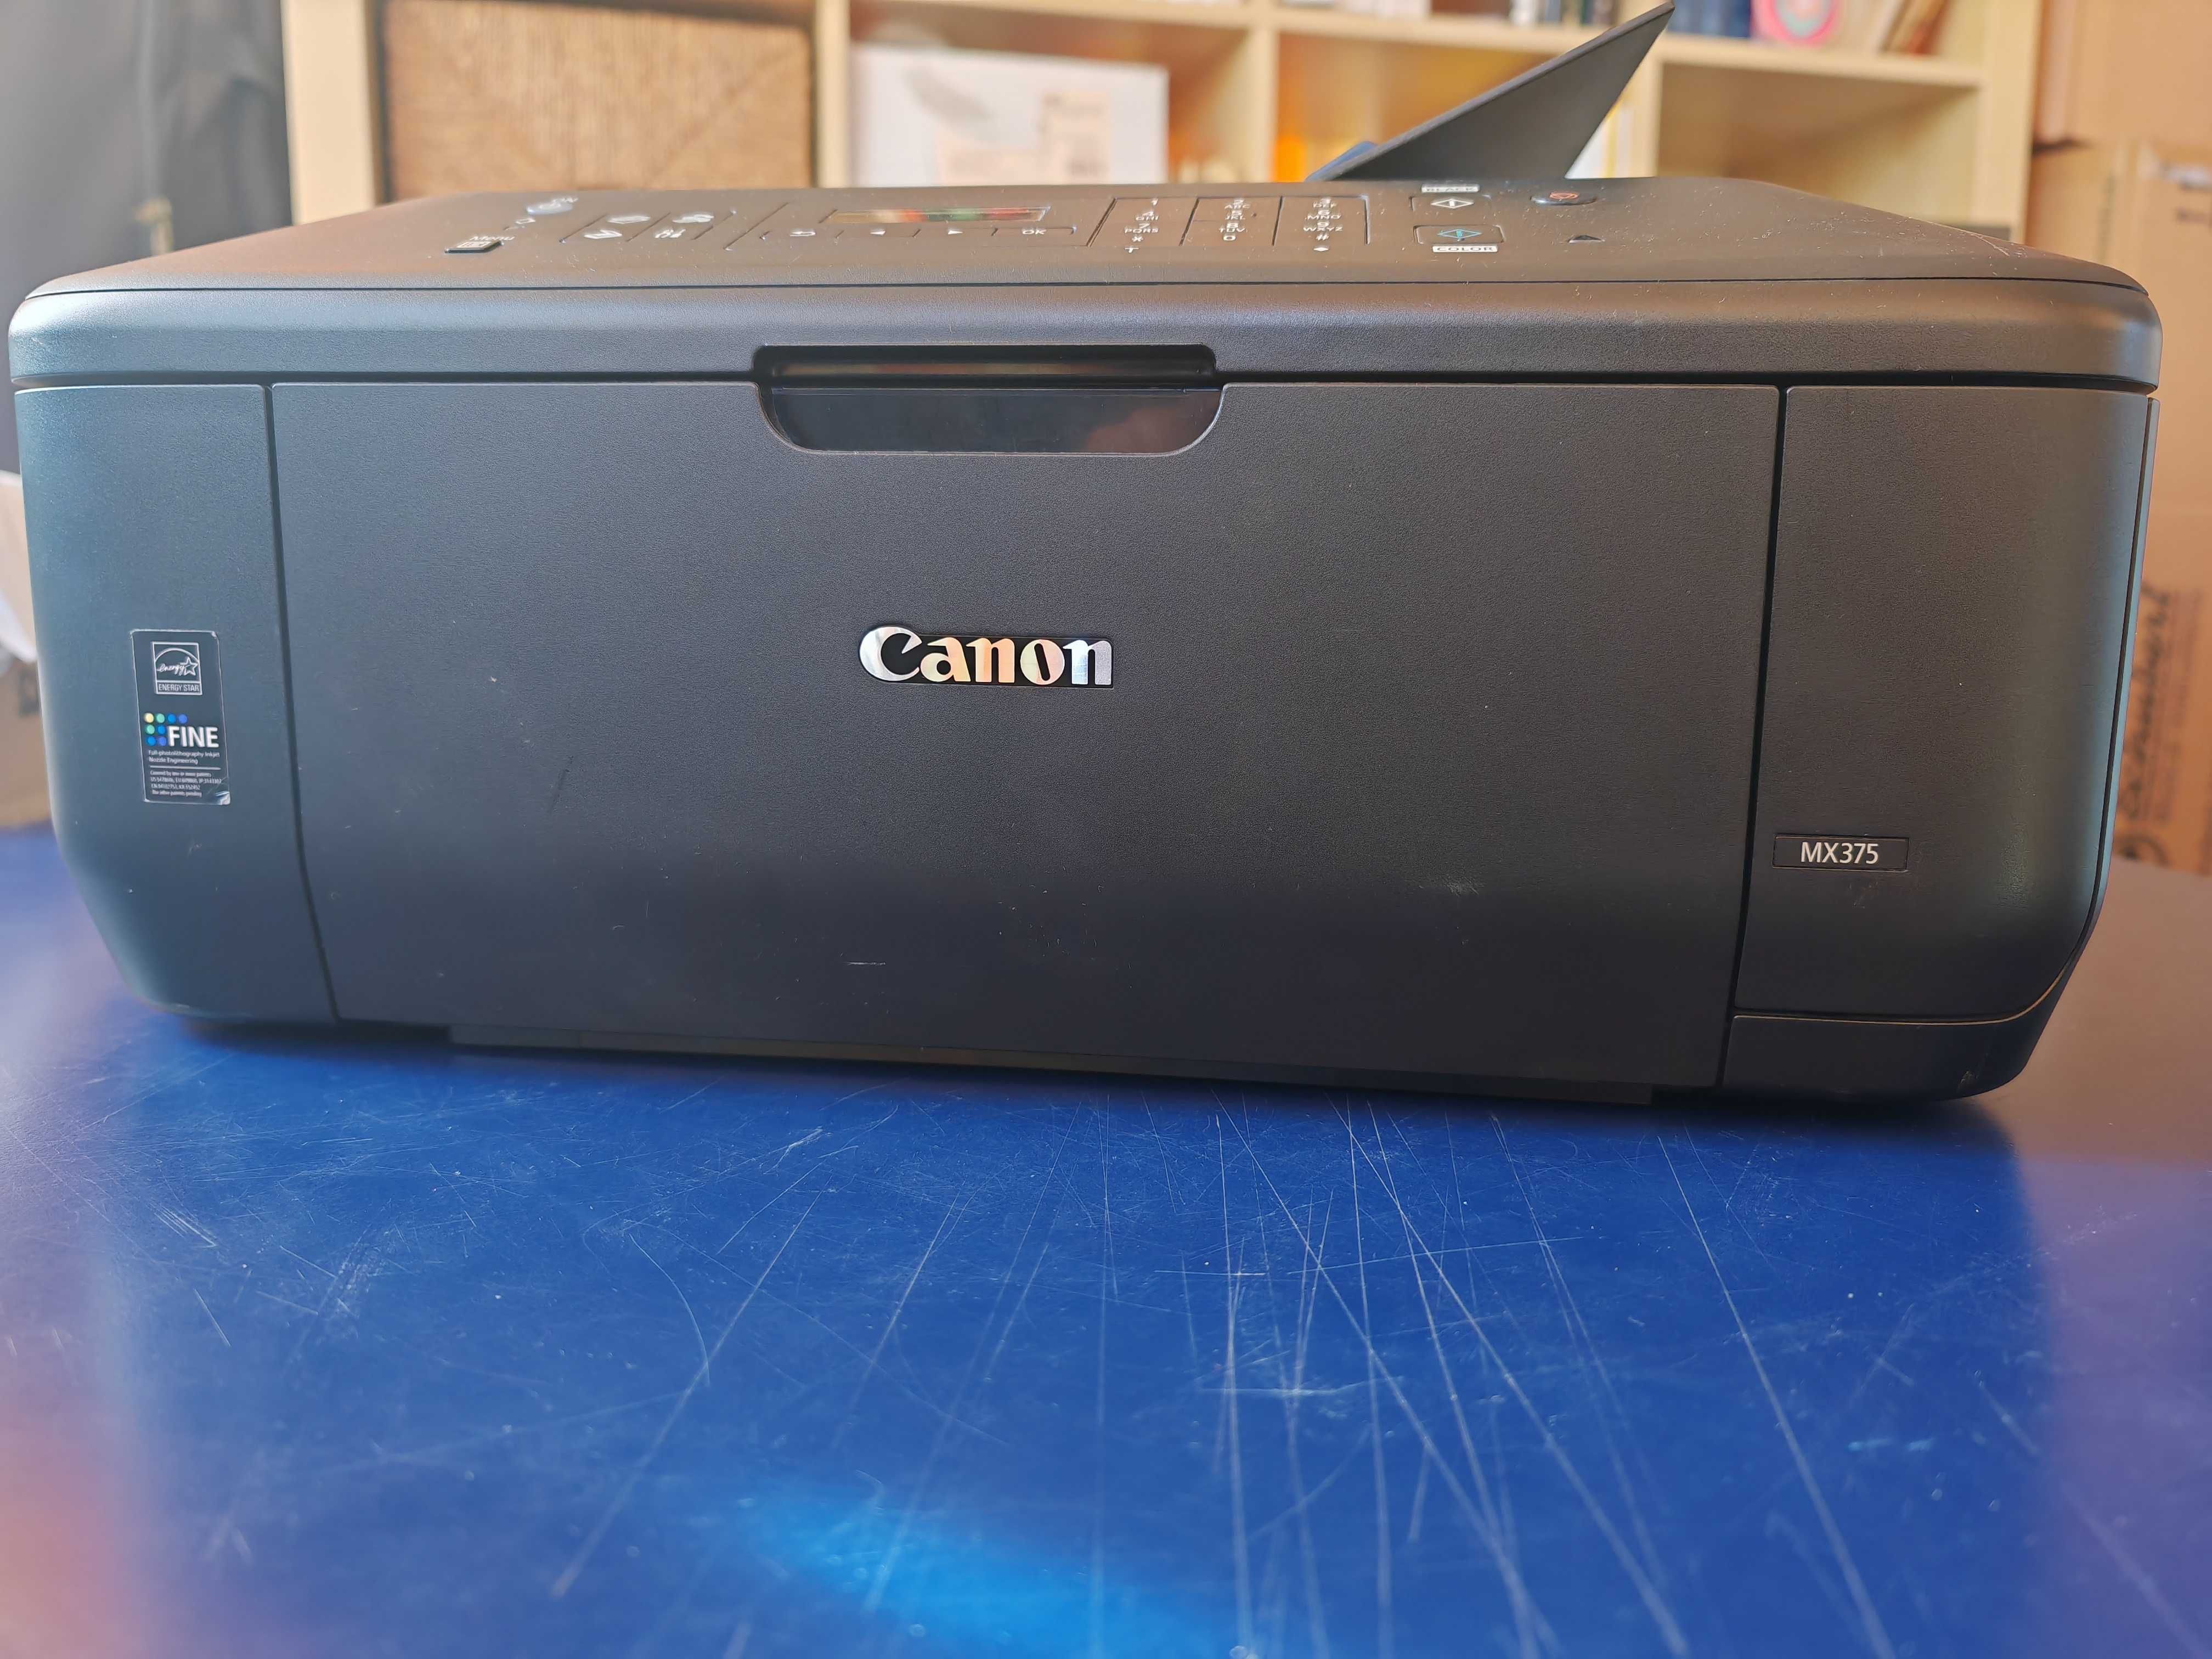 Multifunctionala inkjet Canon MX375 defect pt. piese sau pt. scanner